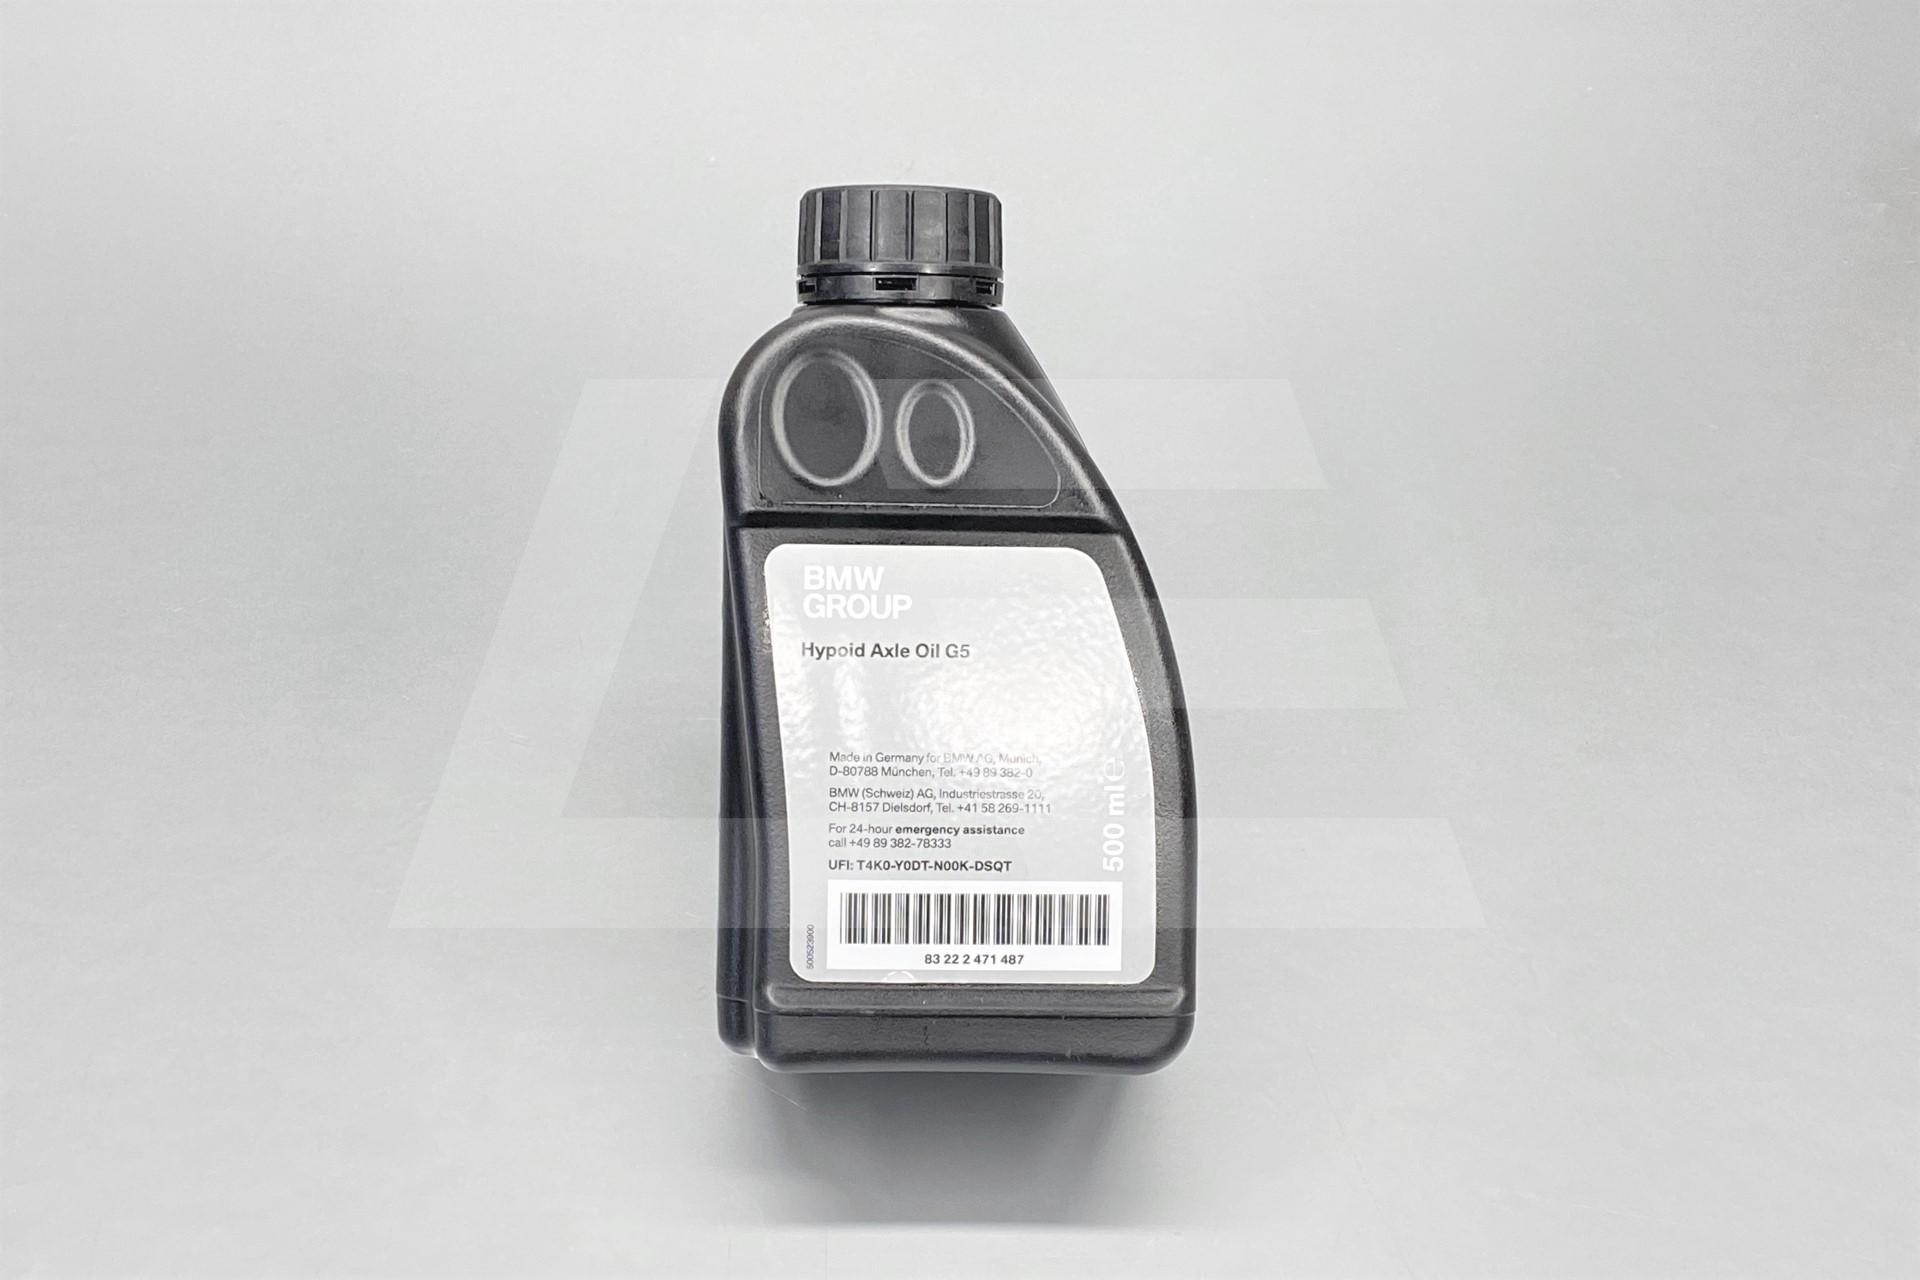 Hypoid Axle Oil g4 для BMW 500ml. BMW 83222471487. Hcf2 трансмиссионное масло.